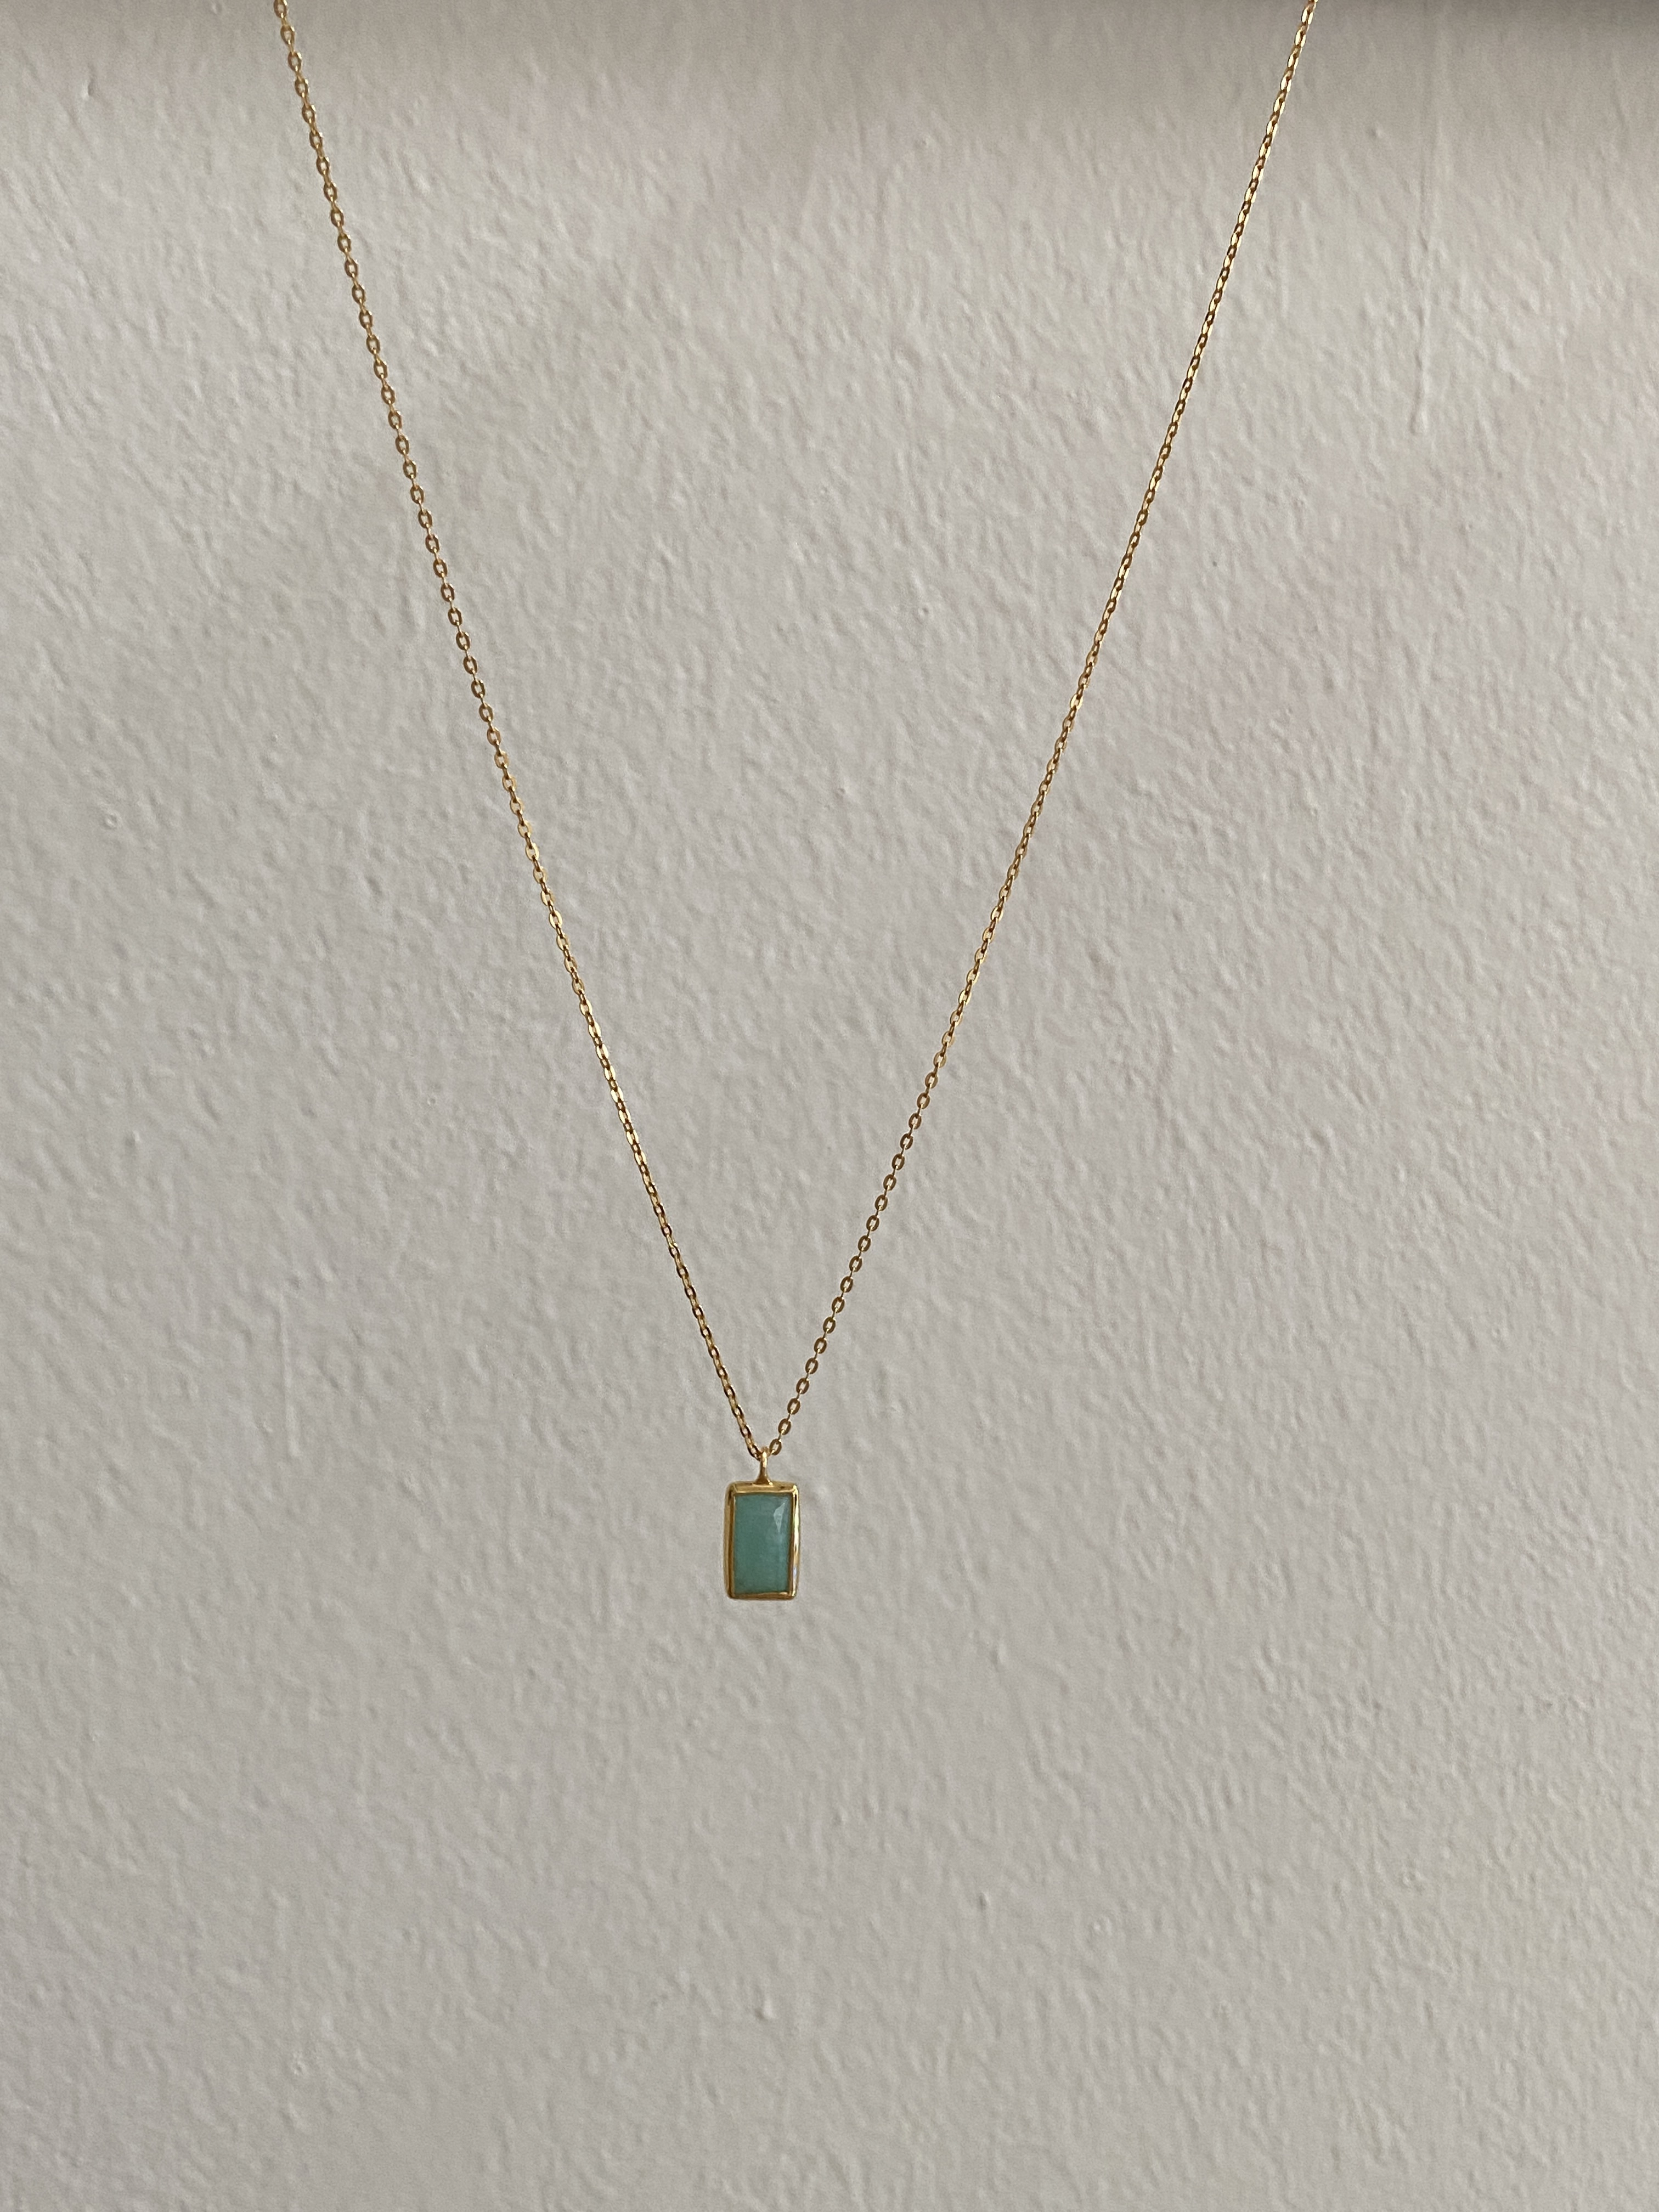 s925 simple Amazonite stone necklace